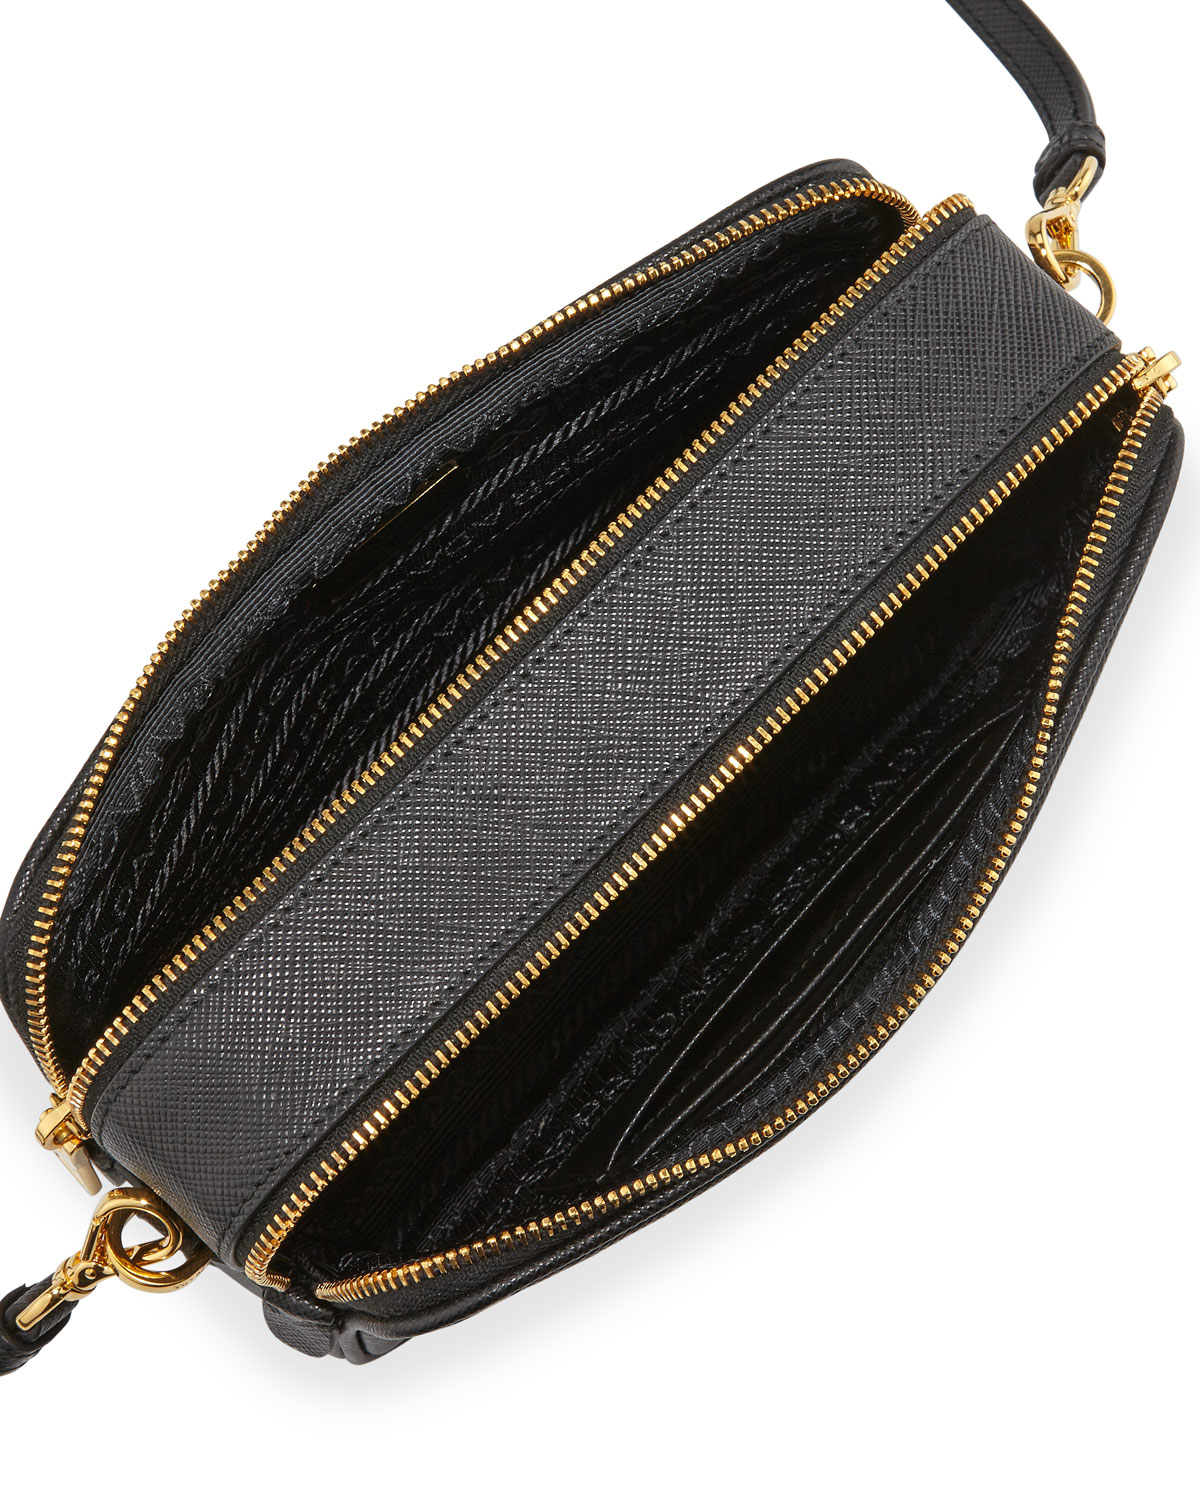 Prada Saffiano Mini Crossbody Bag in Black - Lyst